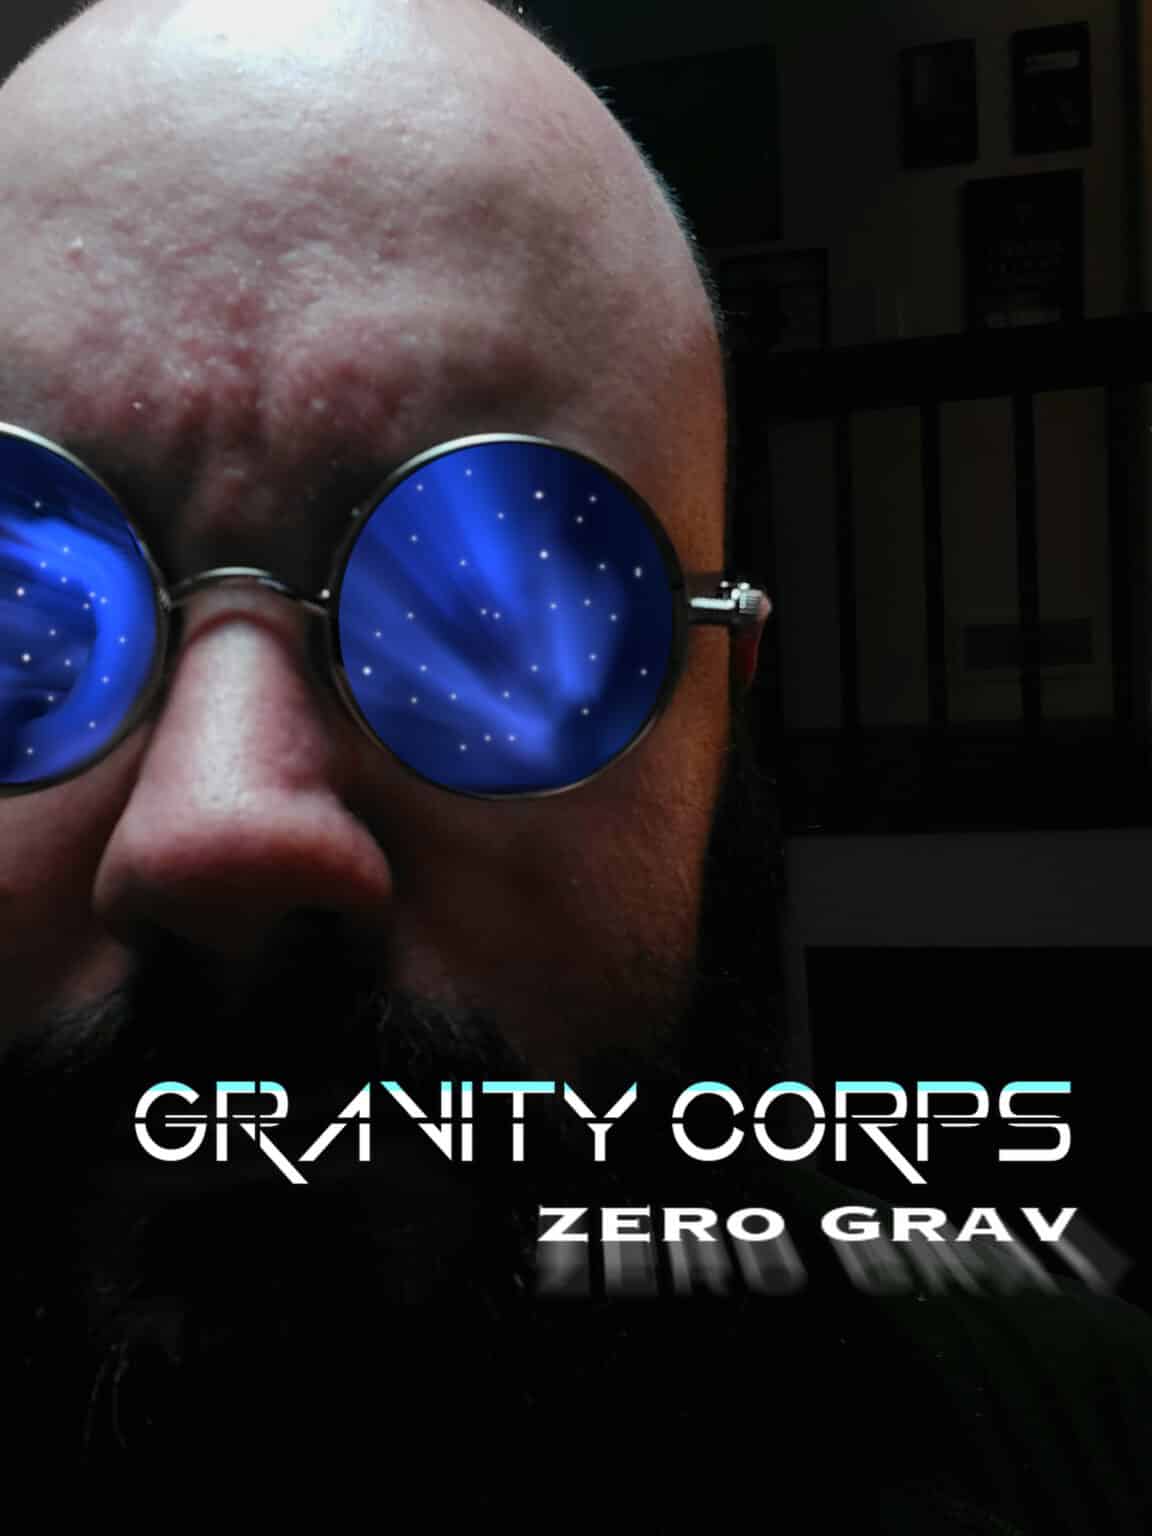 Gravity Corps – Zero Grav